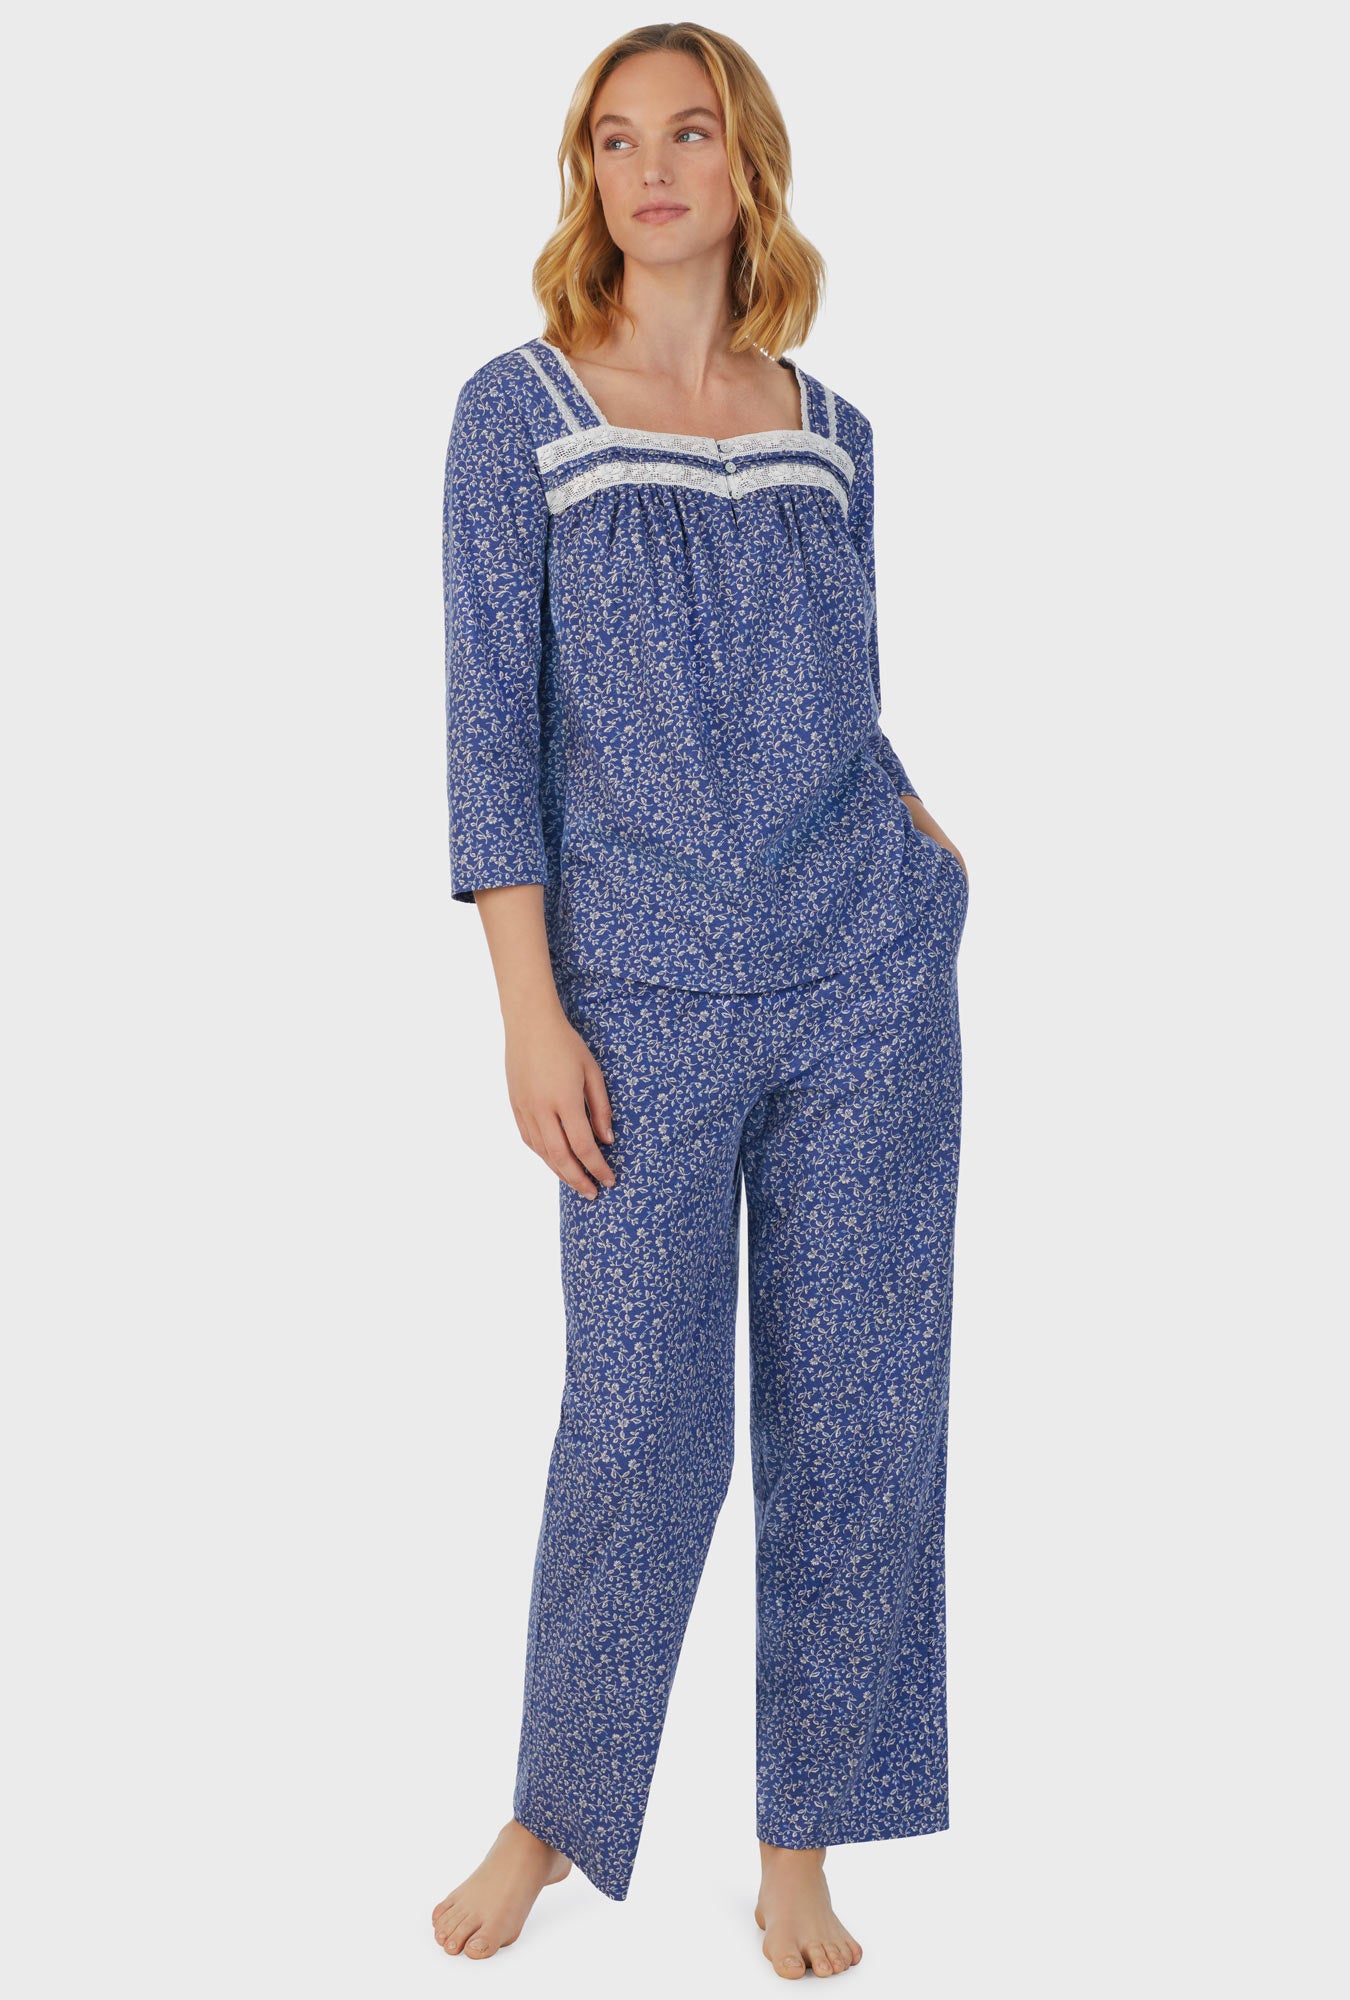 Midnight by Carole Hochman Knit Pajama Set & Reviews